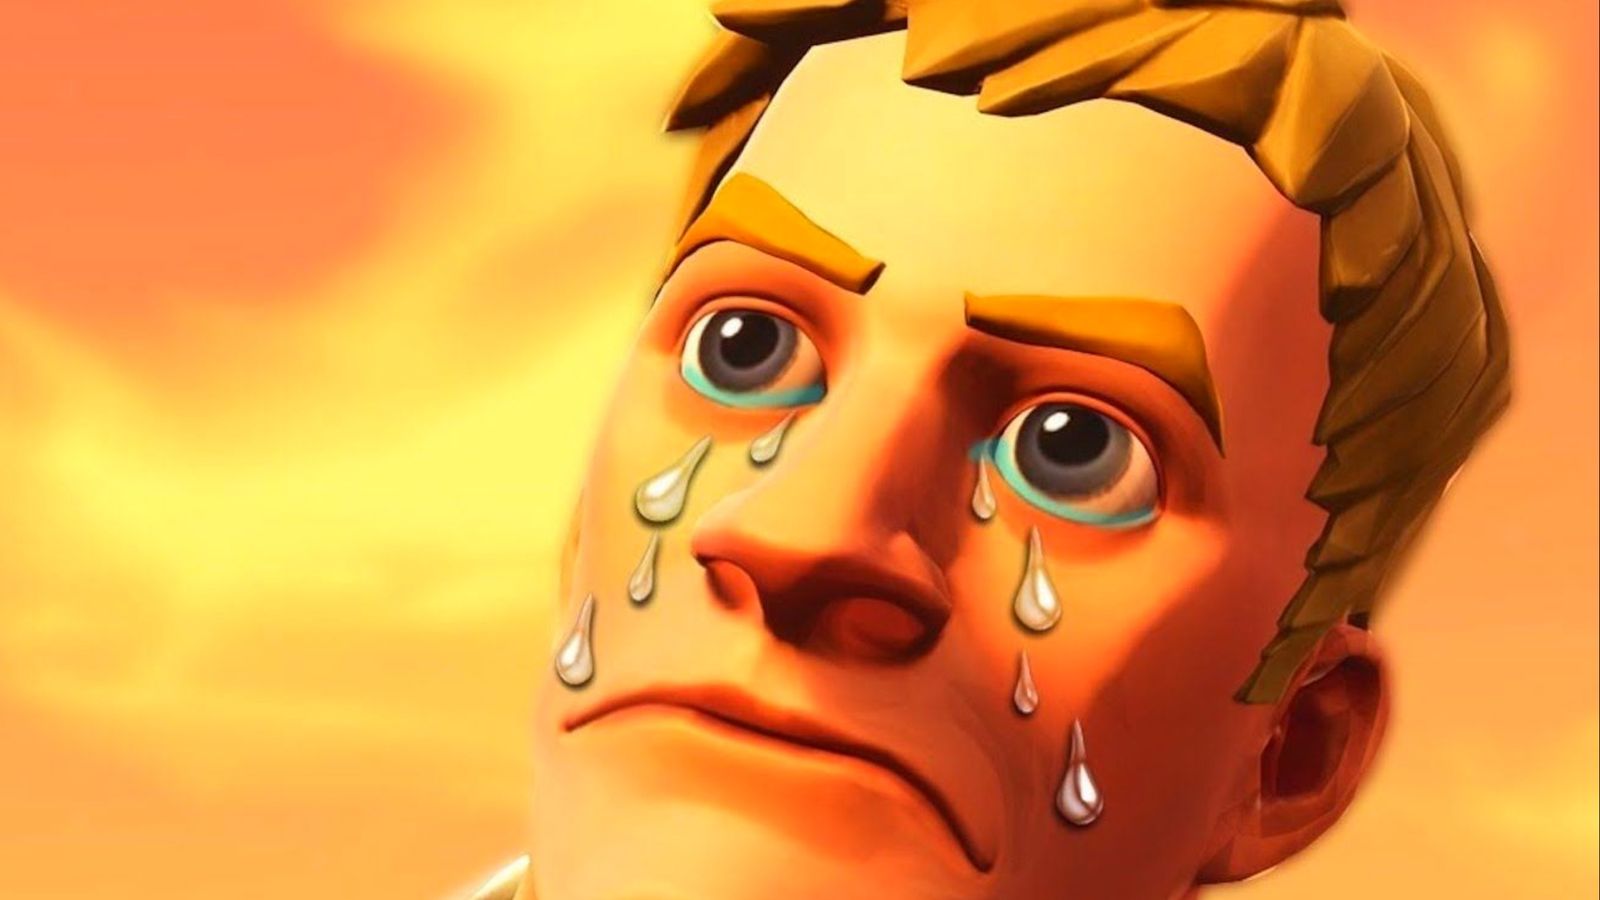 Fortnite character Jonesy crying